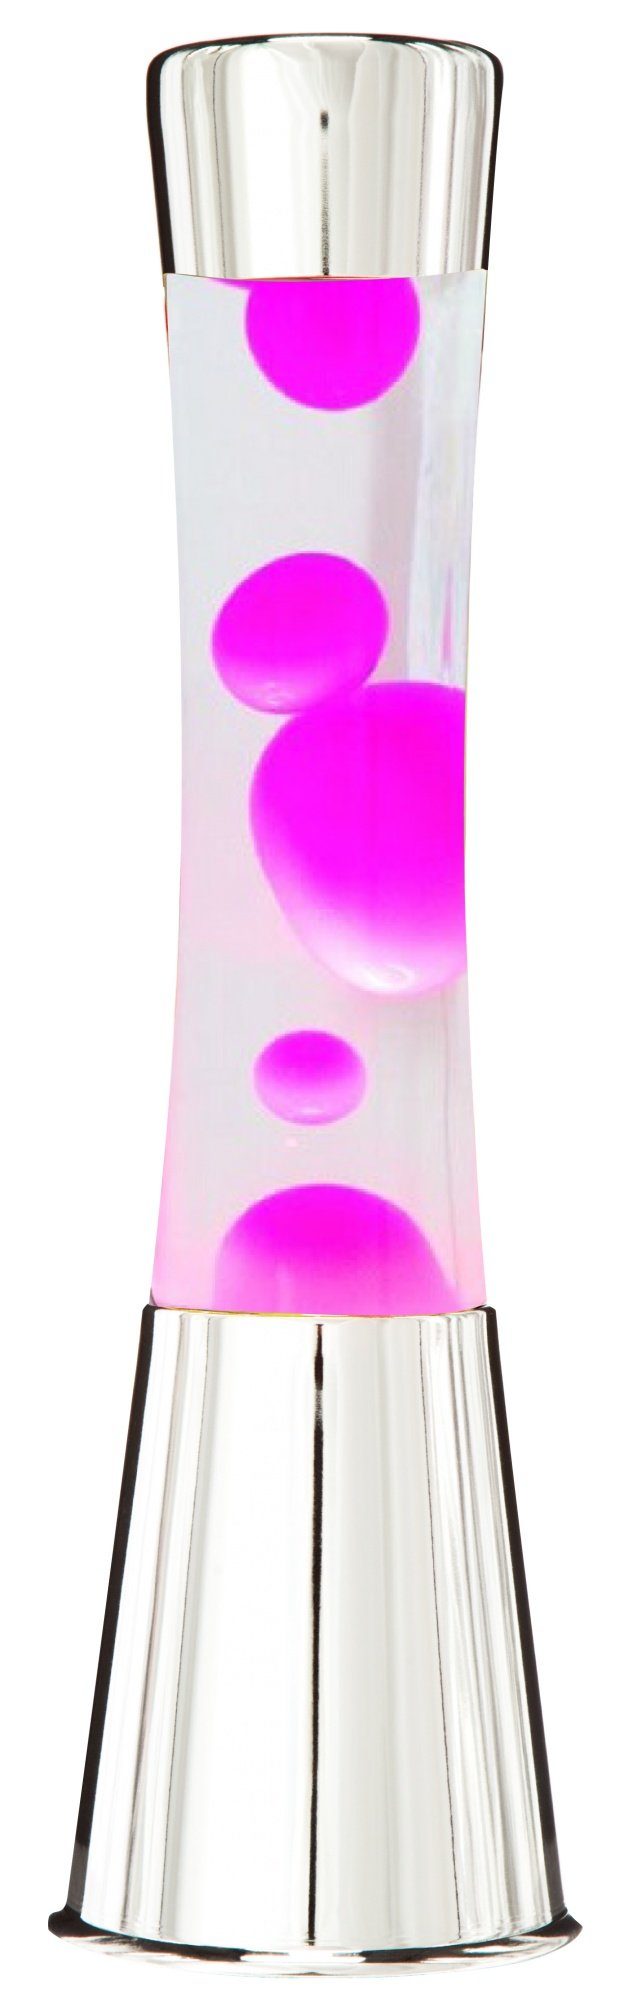 Lavalampen Lavalampe 40cm Pink/ Magma Lampe Chrom Pink